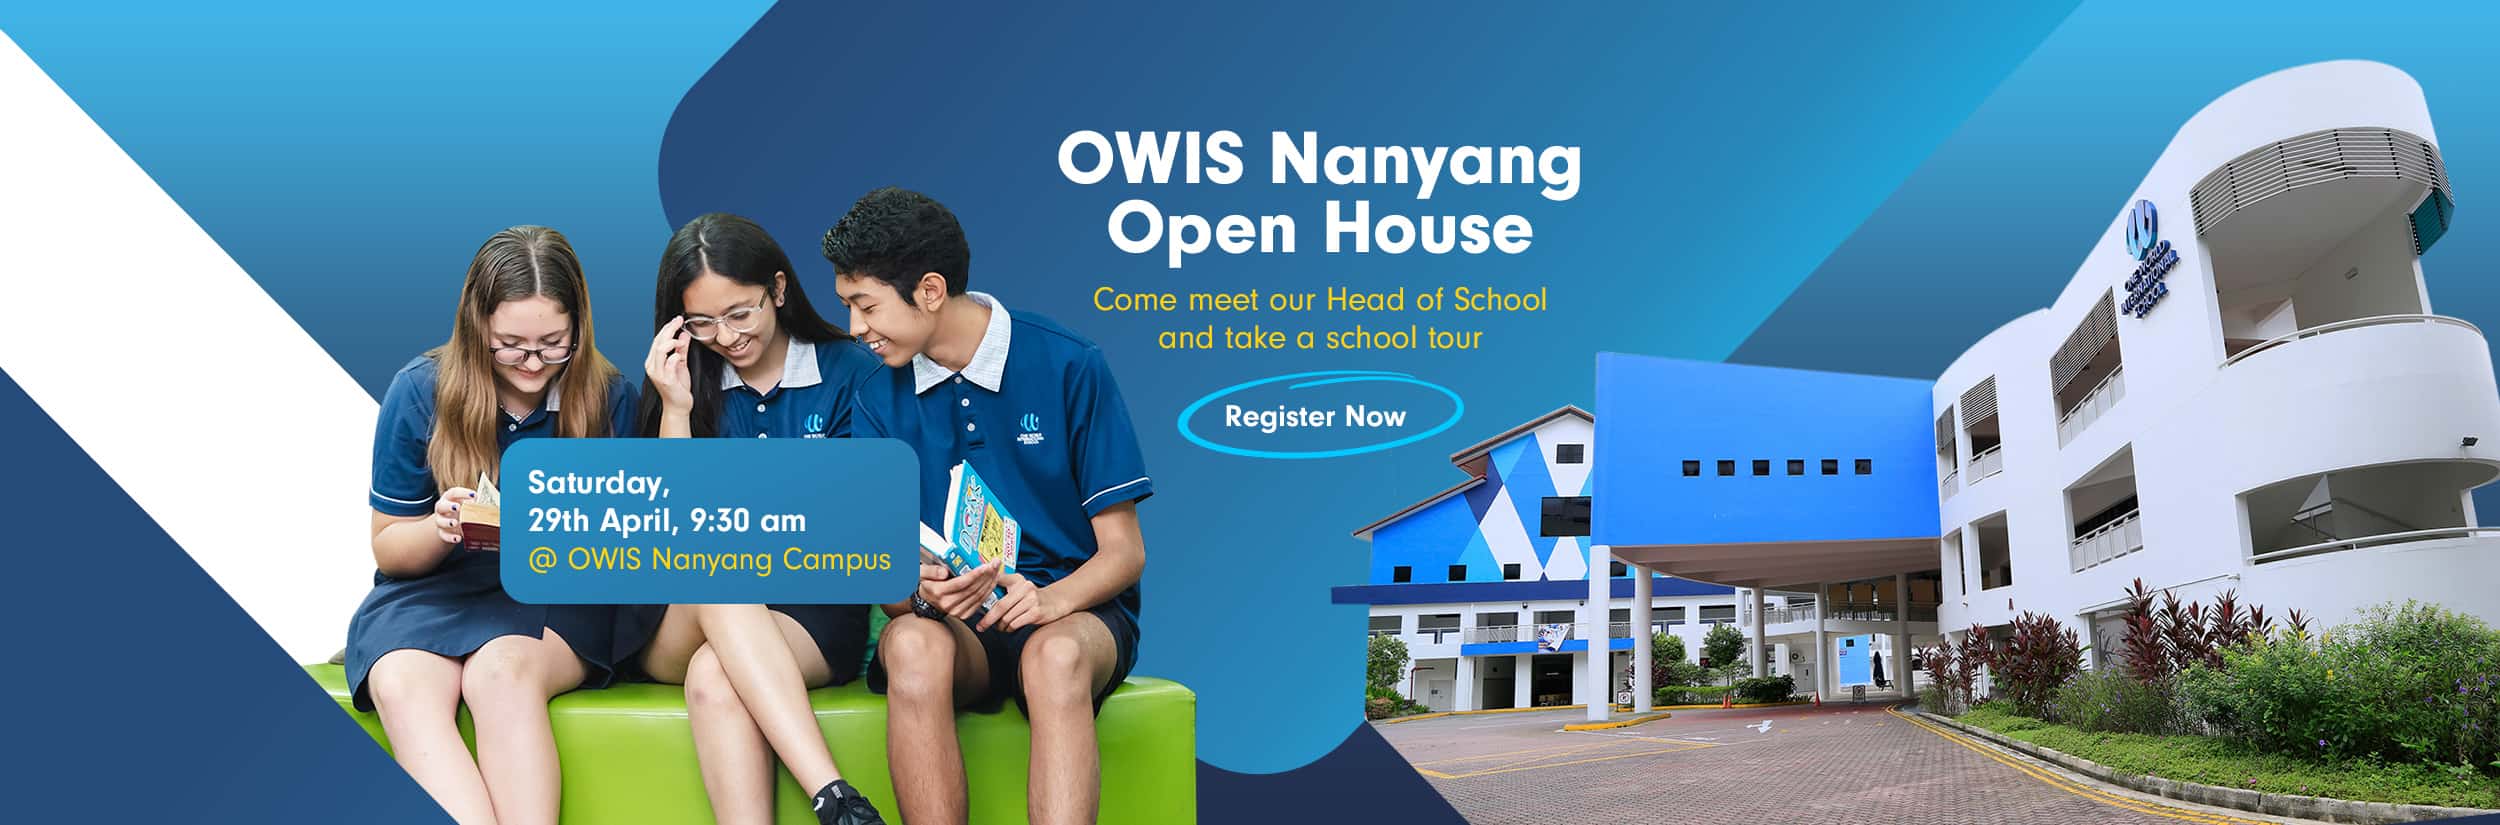 OWIS_OpenHouse_Nanyang_HeroScrollerBanner_2500x825_OpA1